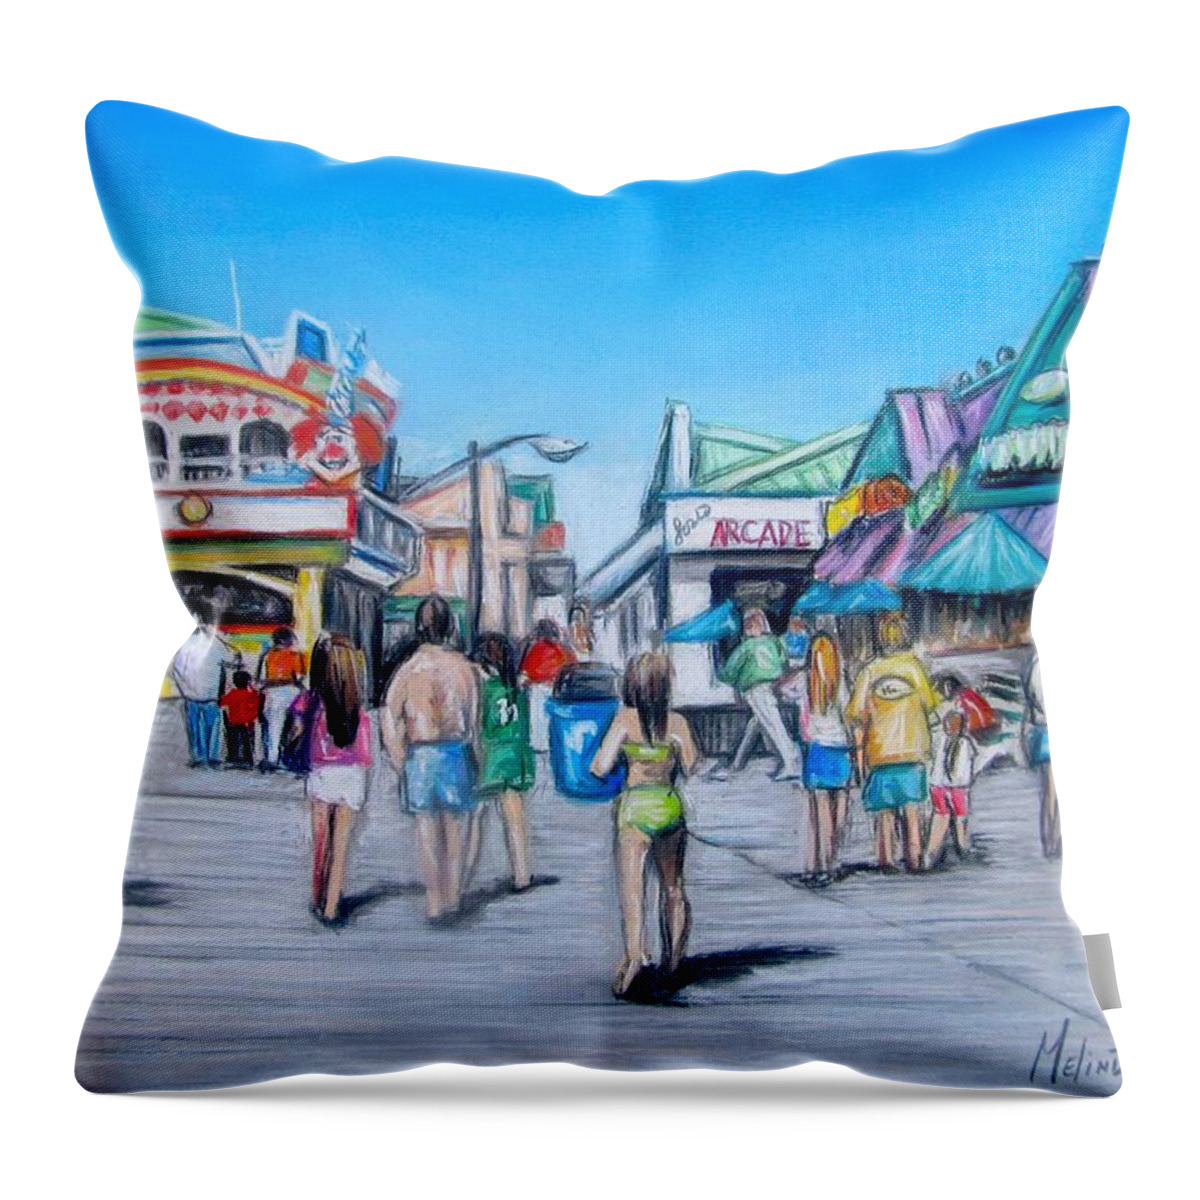 Point Pleasant Beach Art Throw Pillow featuring the painting Point Pleasant Beach Boardwalk by Melinda Saminski